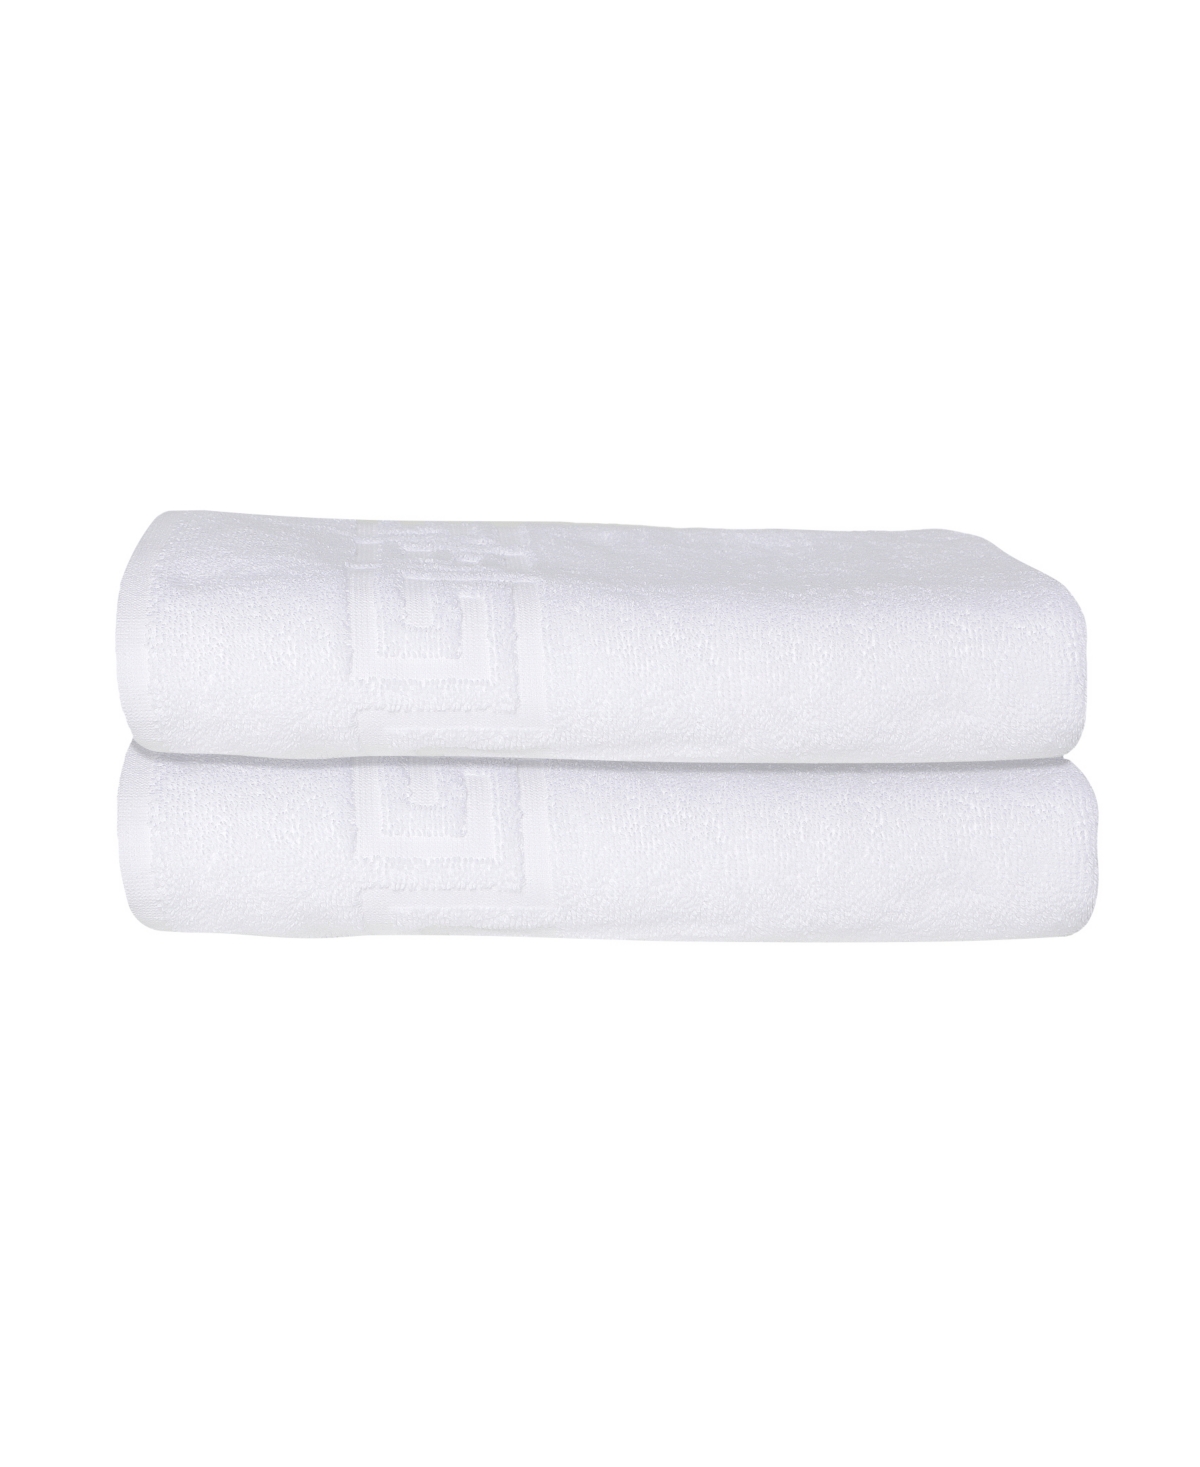 Shop Ozan Premium Home Milos Greek Key Design Collection 100% Turkish Cotton Bath Towel, 27" X 54" In Navy